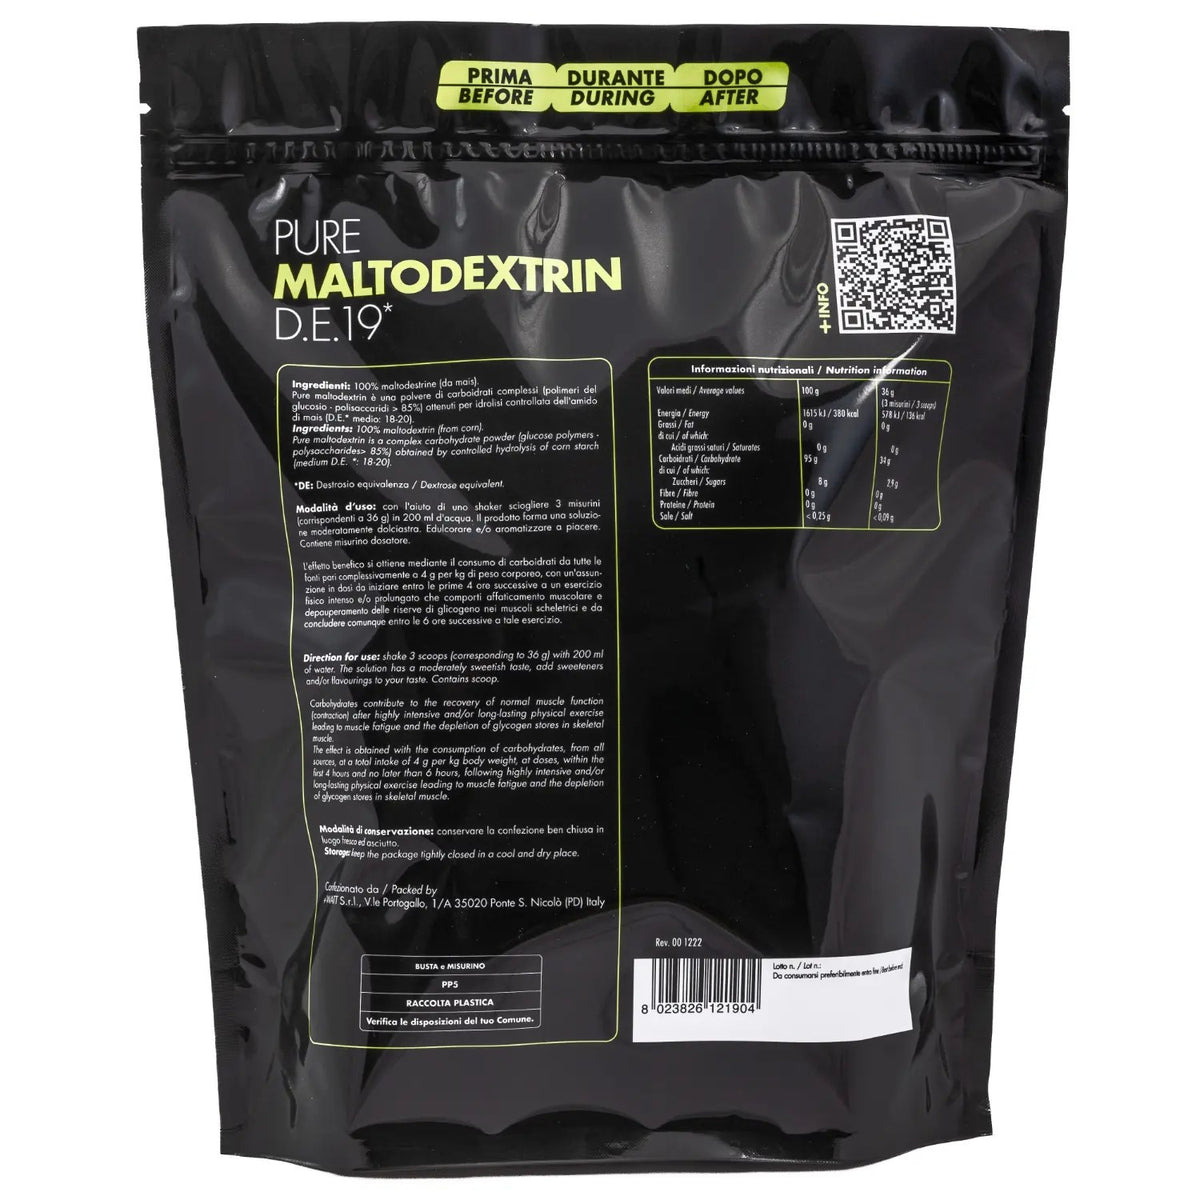 Maltodestrina - Pure Maltodextrin D.E. 19 - +WATT